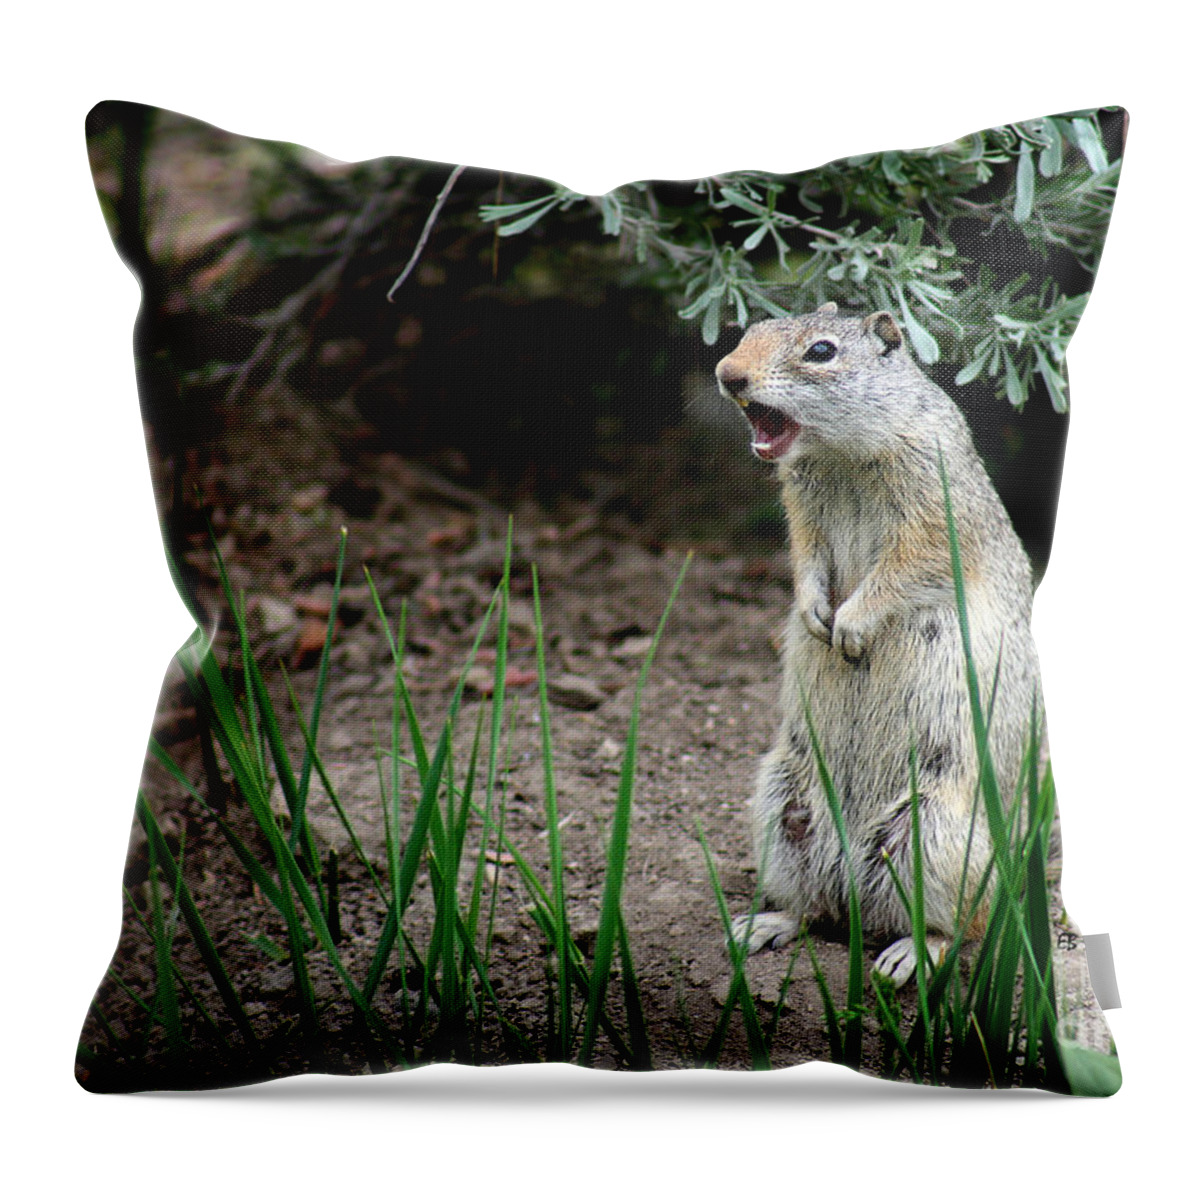 Uinta Ground Squirrel Throw Pillow featuring the photograph Uinta Ground Squirrel by E B Schmidt